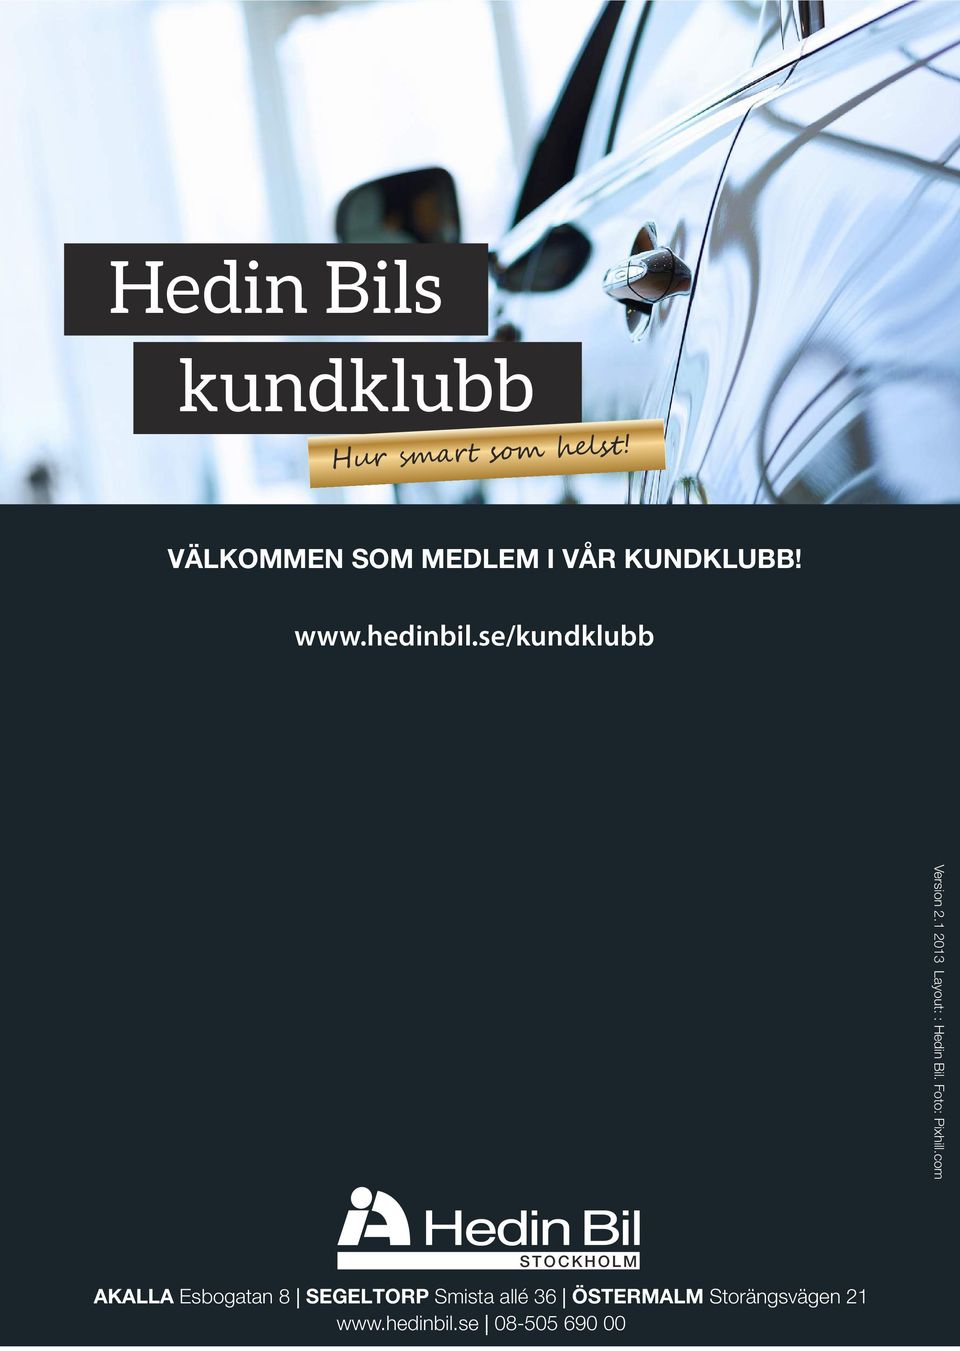 se/kundklubb kundklubb@hedinbil.se Version 2.1 2013 Layout: : Hedin Bil.